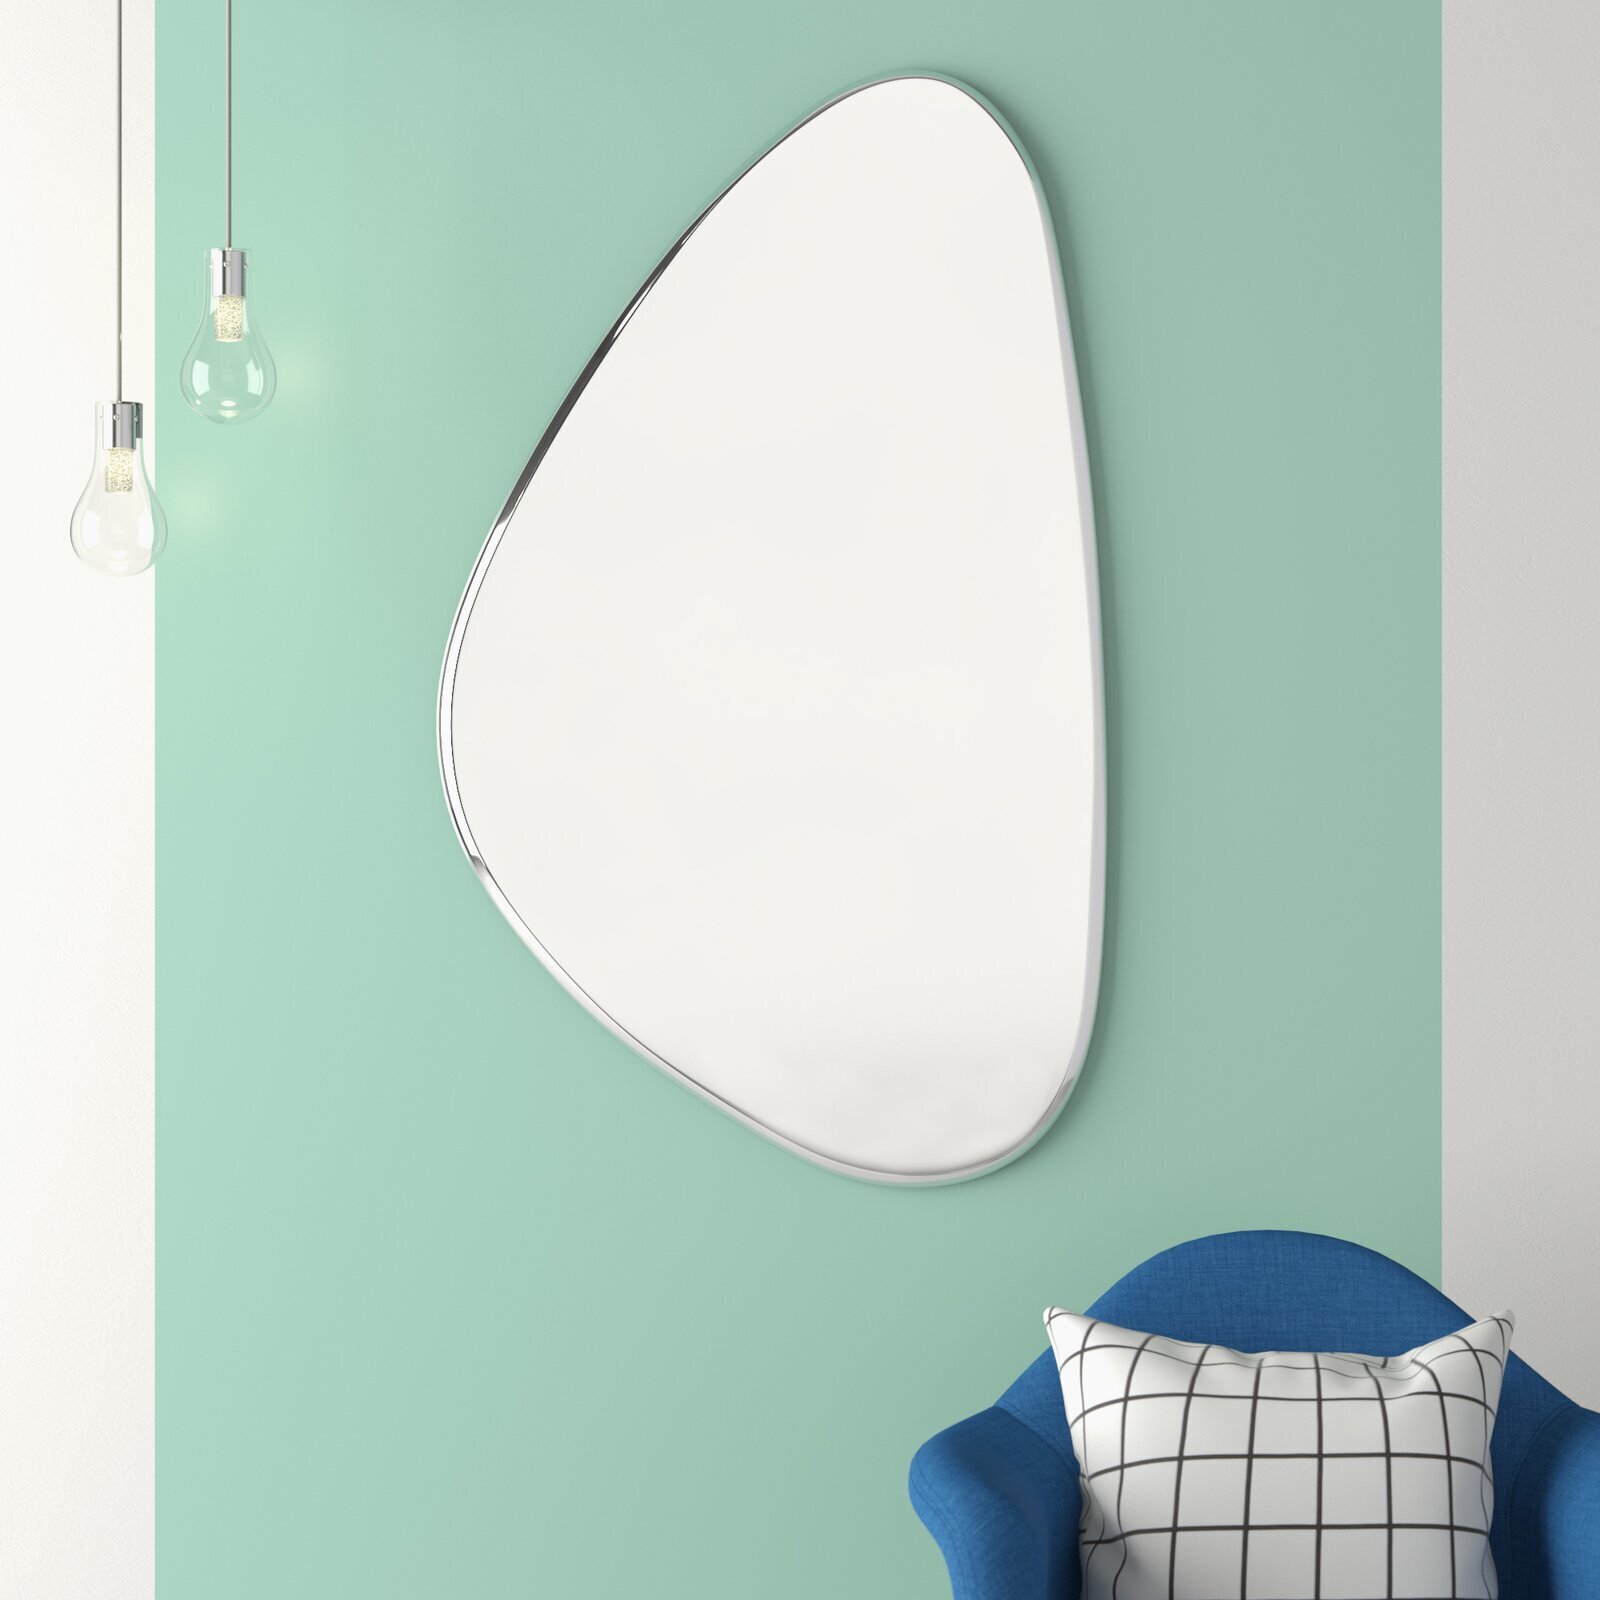 Oval mid century modern wall mirror